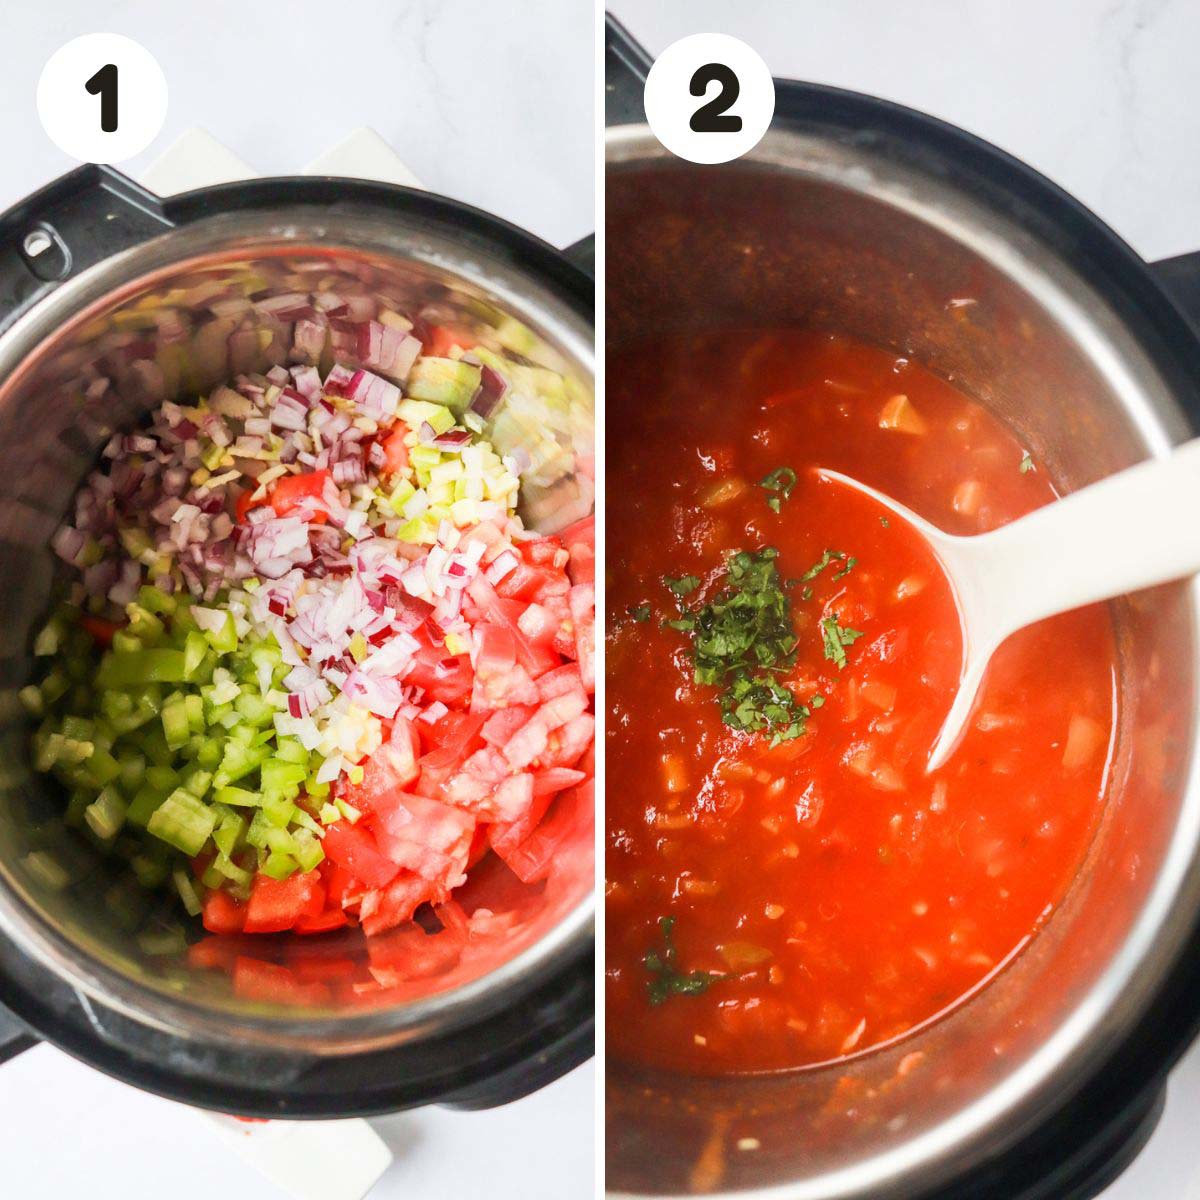 Steps to make the salsa.